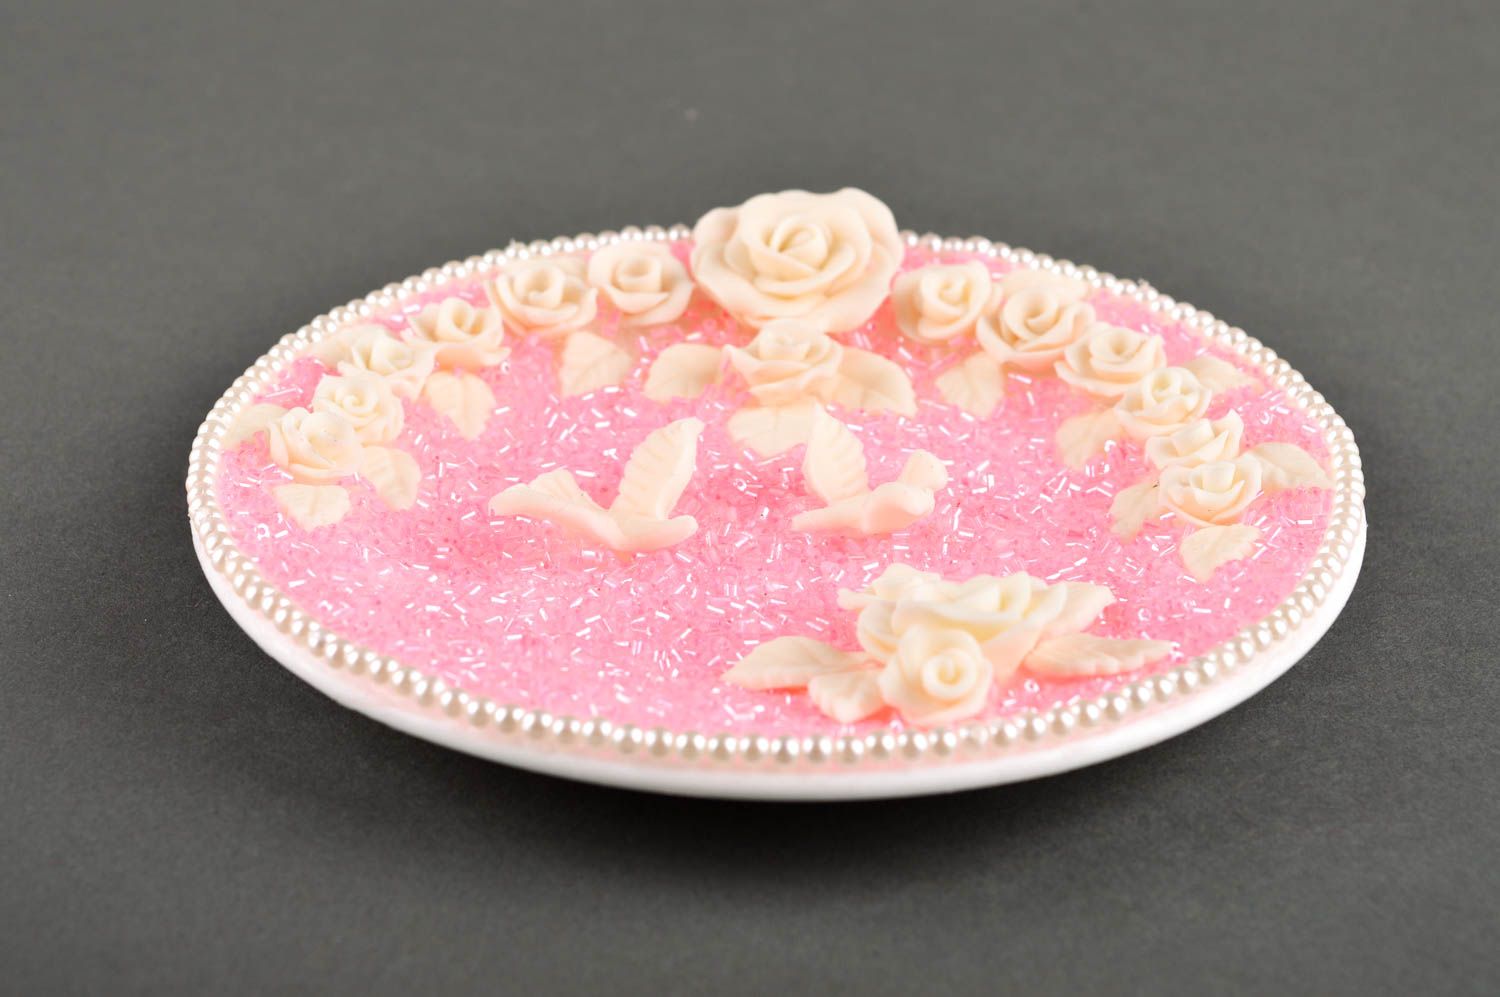 Свадебная тарелка хэнд мэйд посуда на свадьбу красивая посуда розовая тарелка фото 5